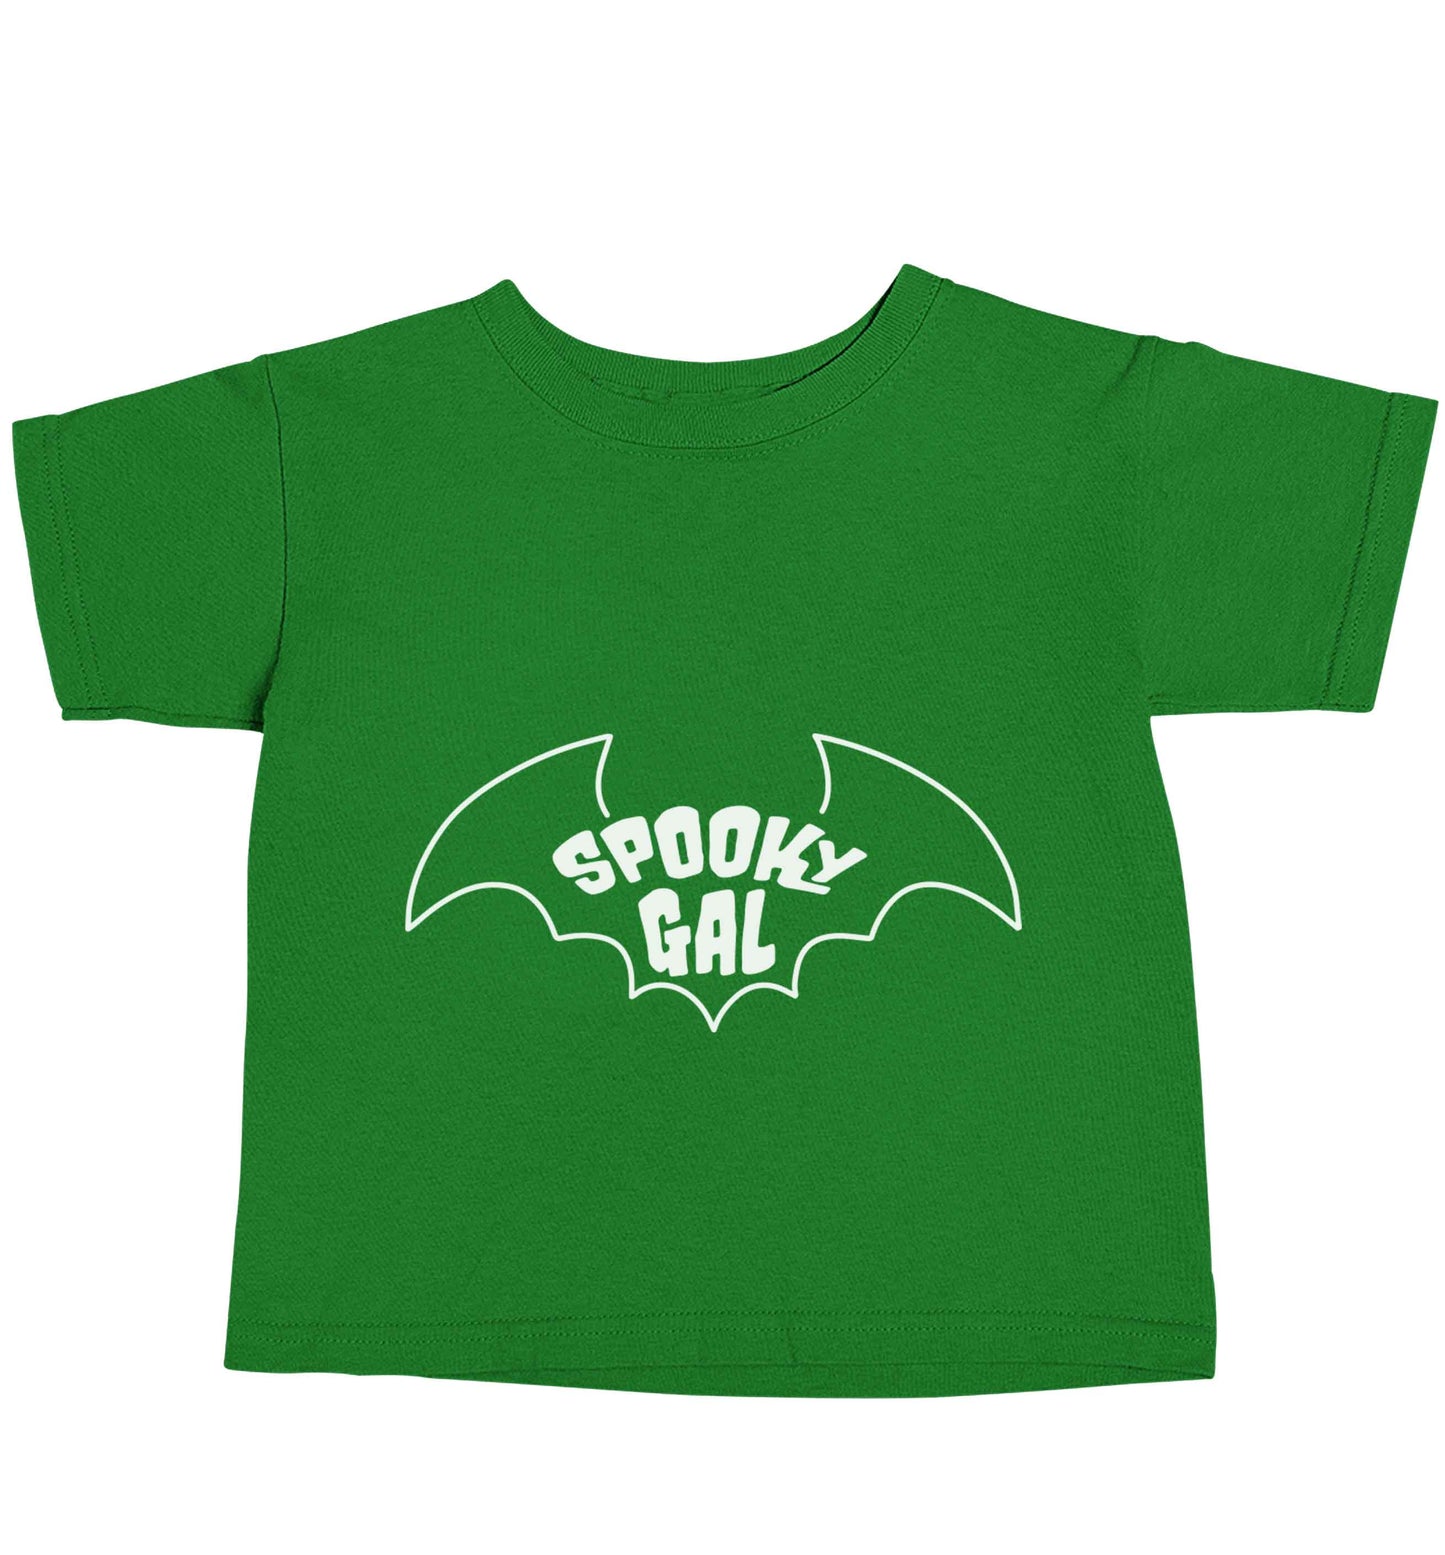 Spooky gal Kit green baby toddler Tshirt 2 Years